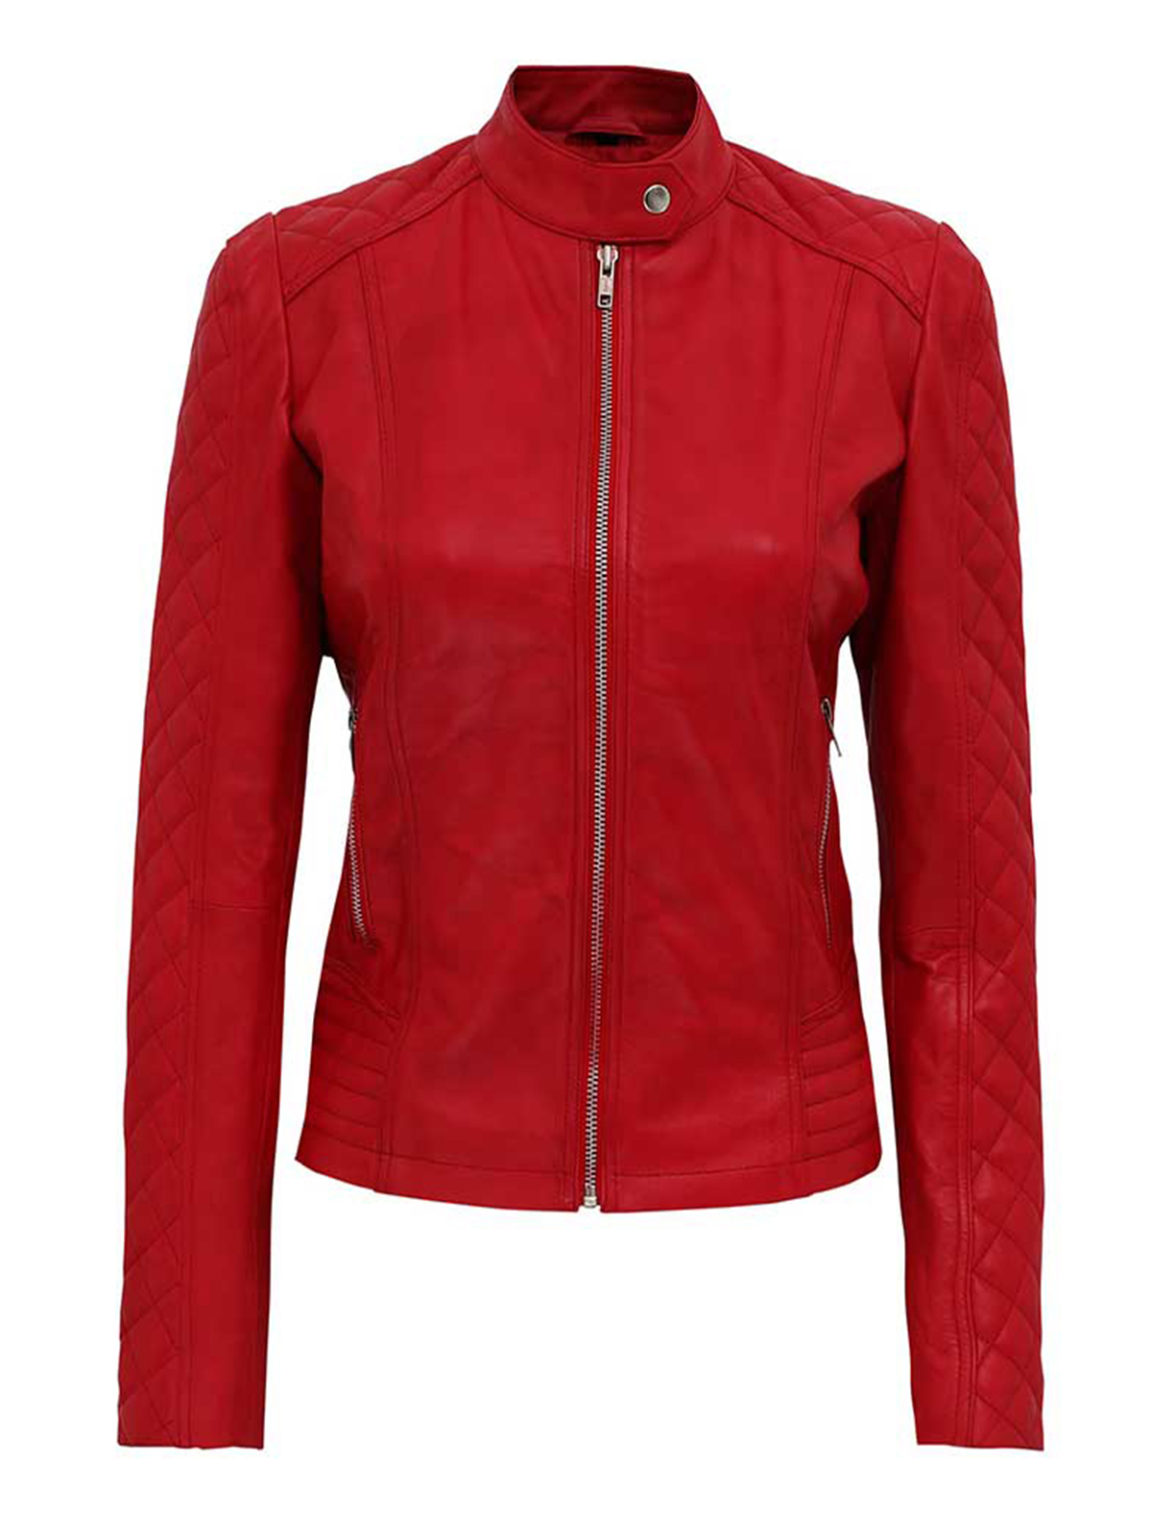 FL Trendy Red Leather Jacket - Stars Jackets